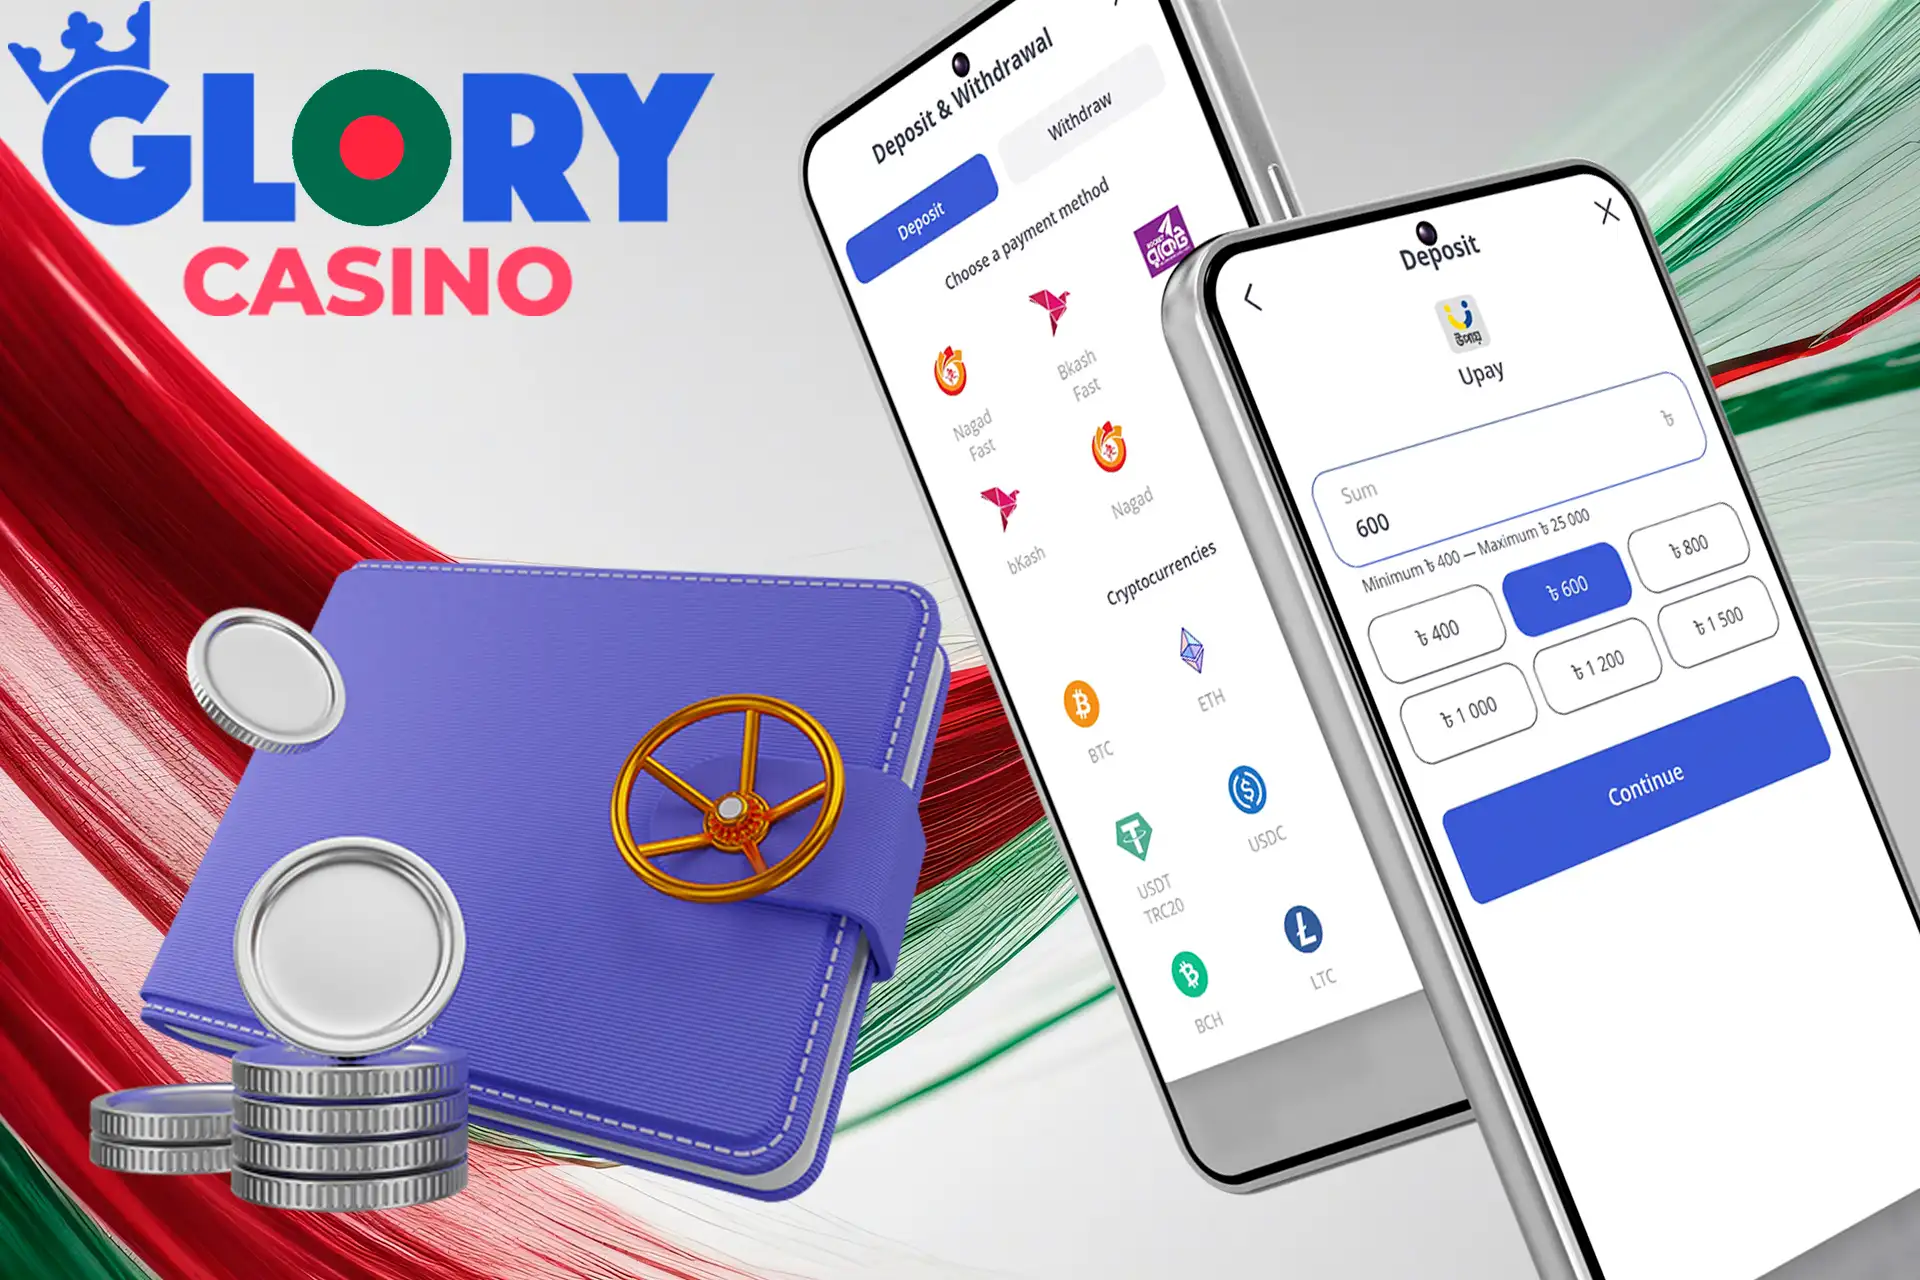 Make your first deposit at Glory Casino Bangladesh